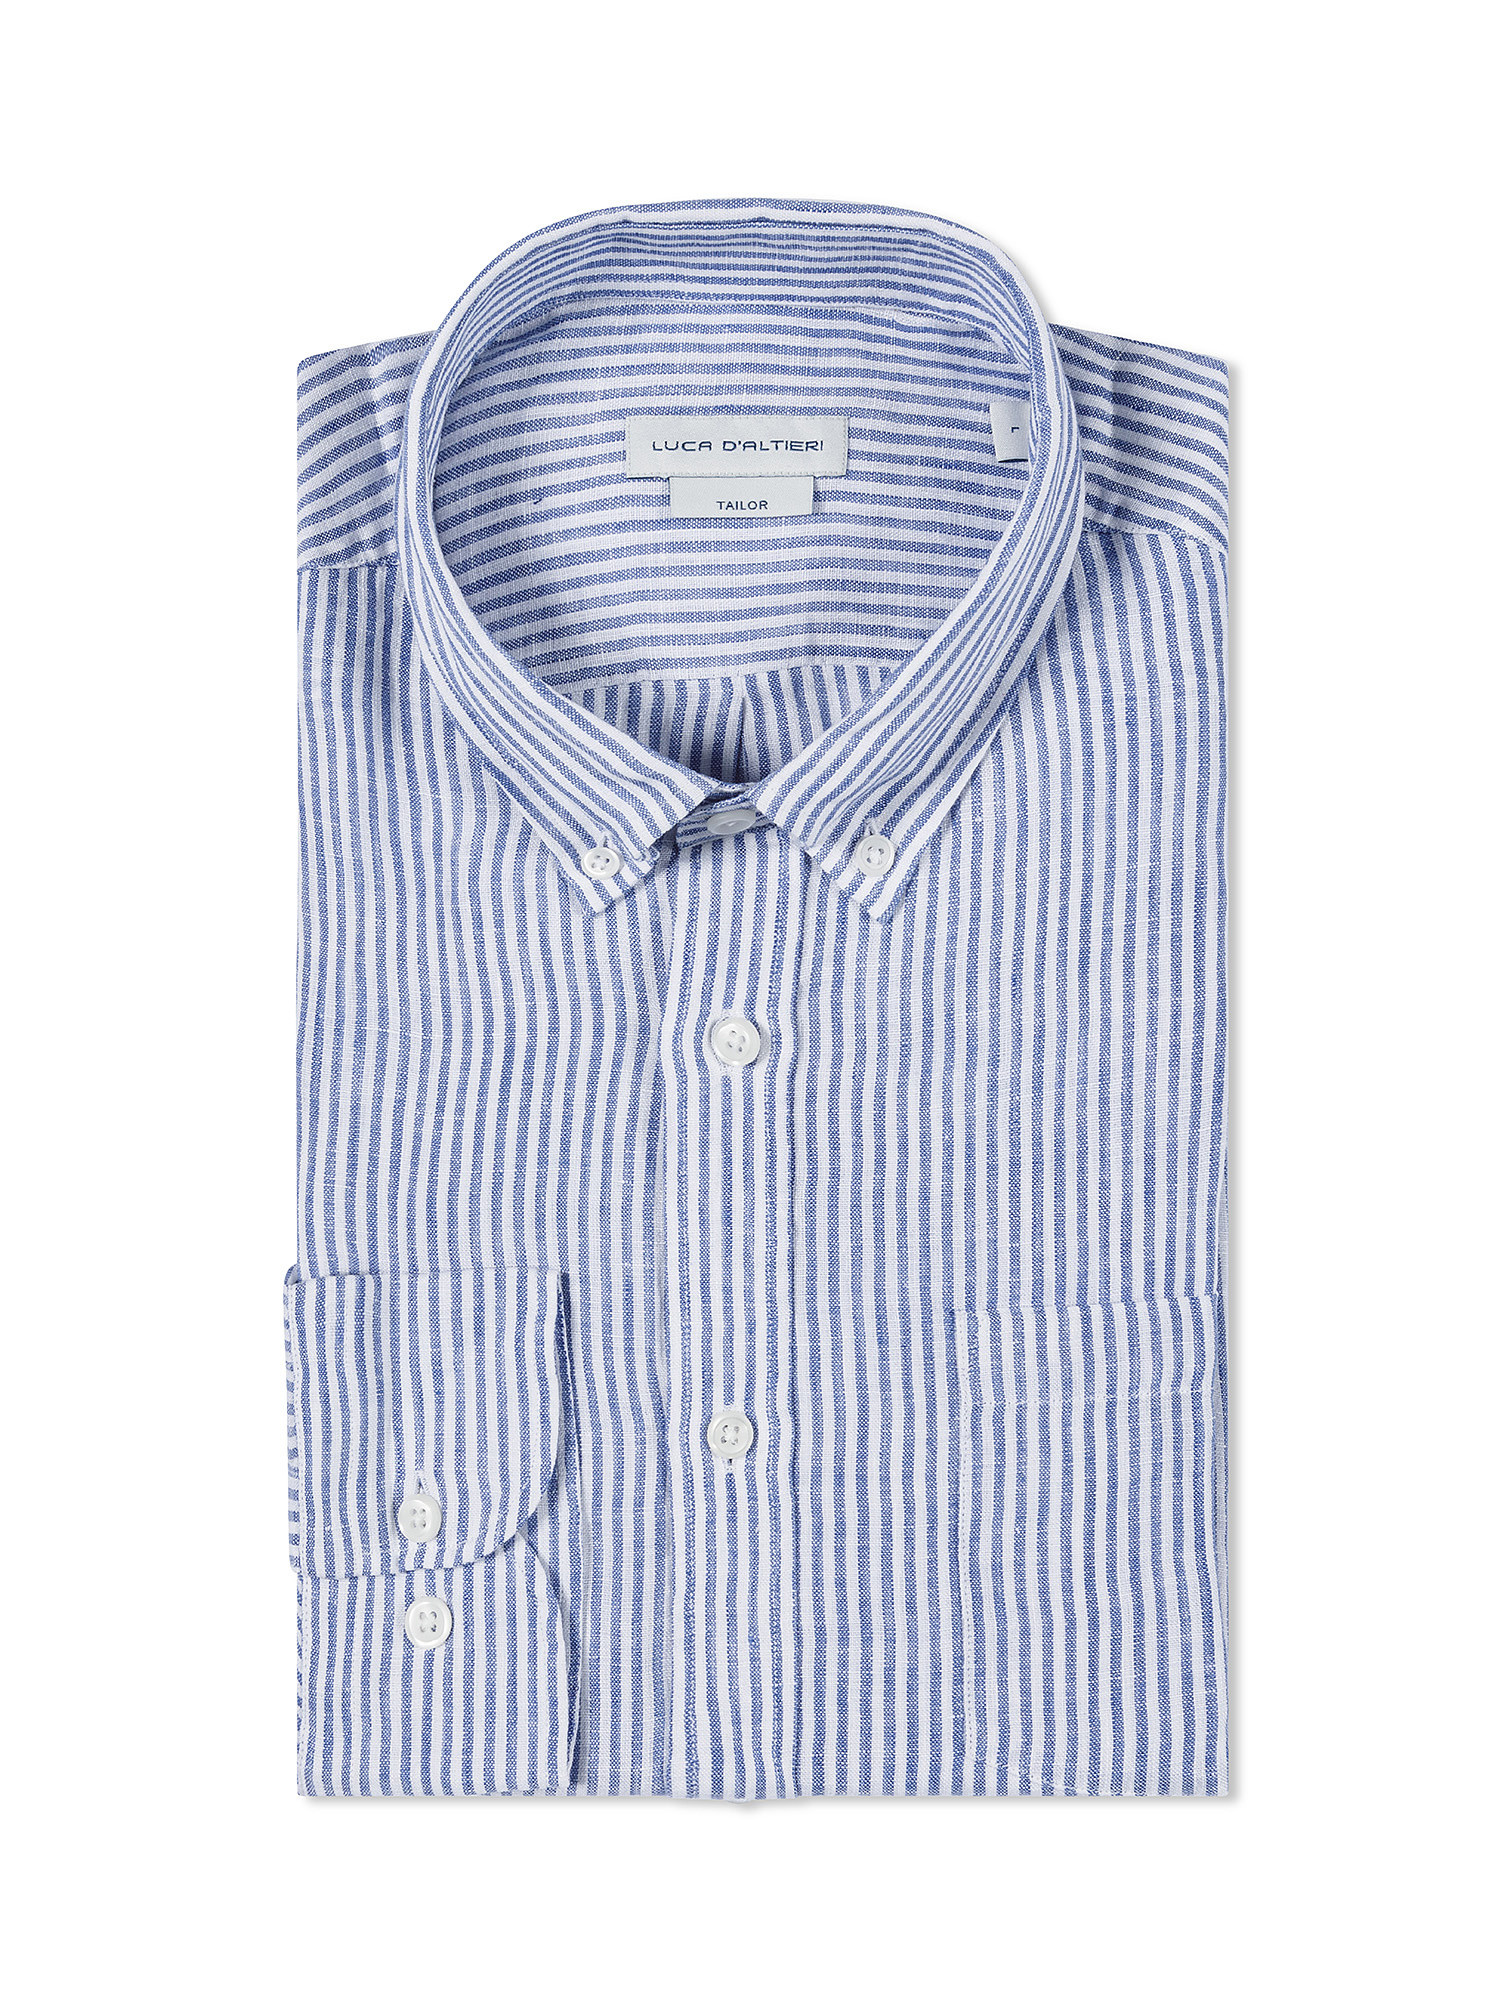 Luca D'Altieri - Tailor fit shirt in pure linen, Blue, large image number 2